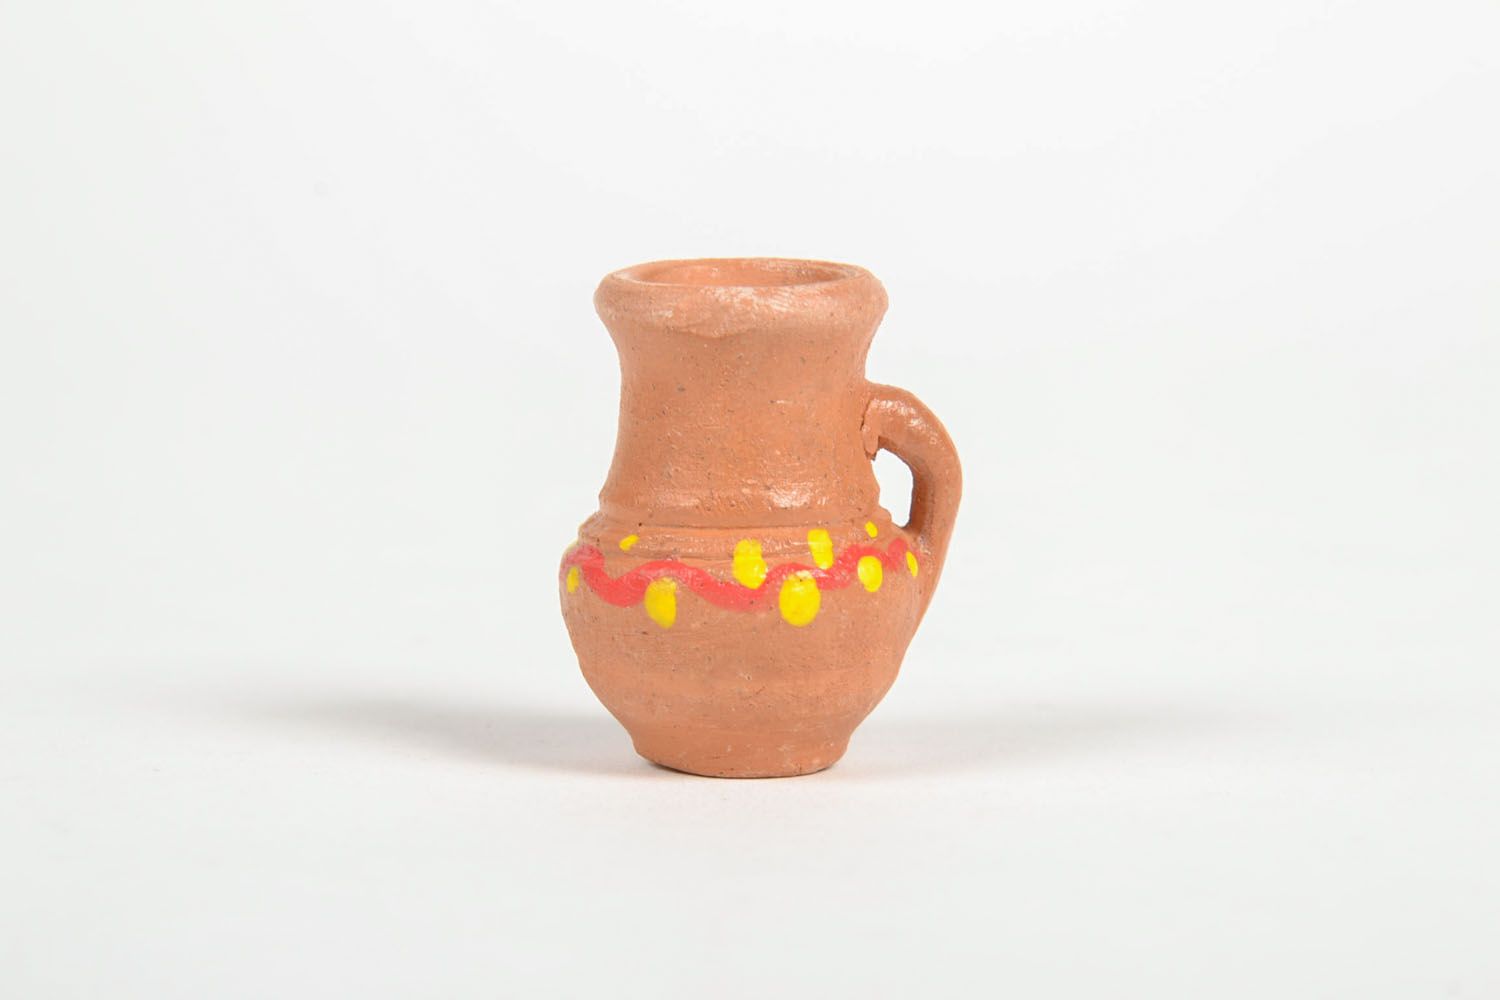 Little mini ceramic pitcher 1,18 inches tall 0,03 lb photo 2